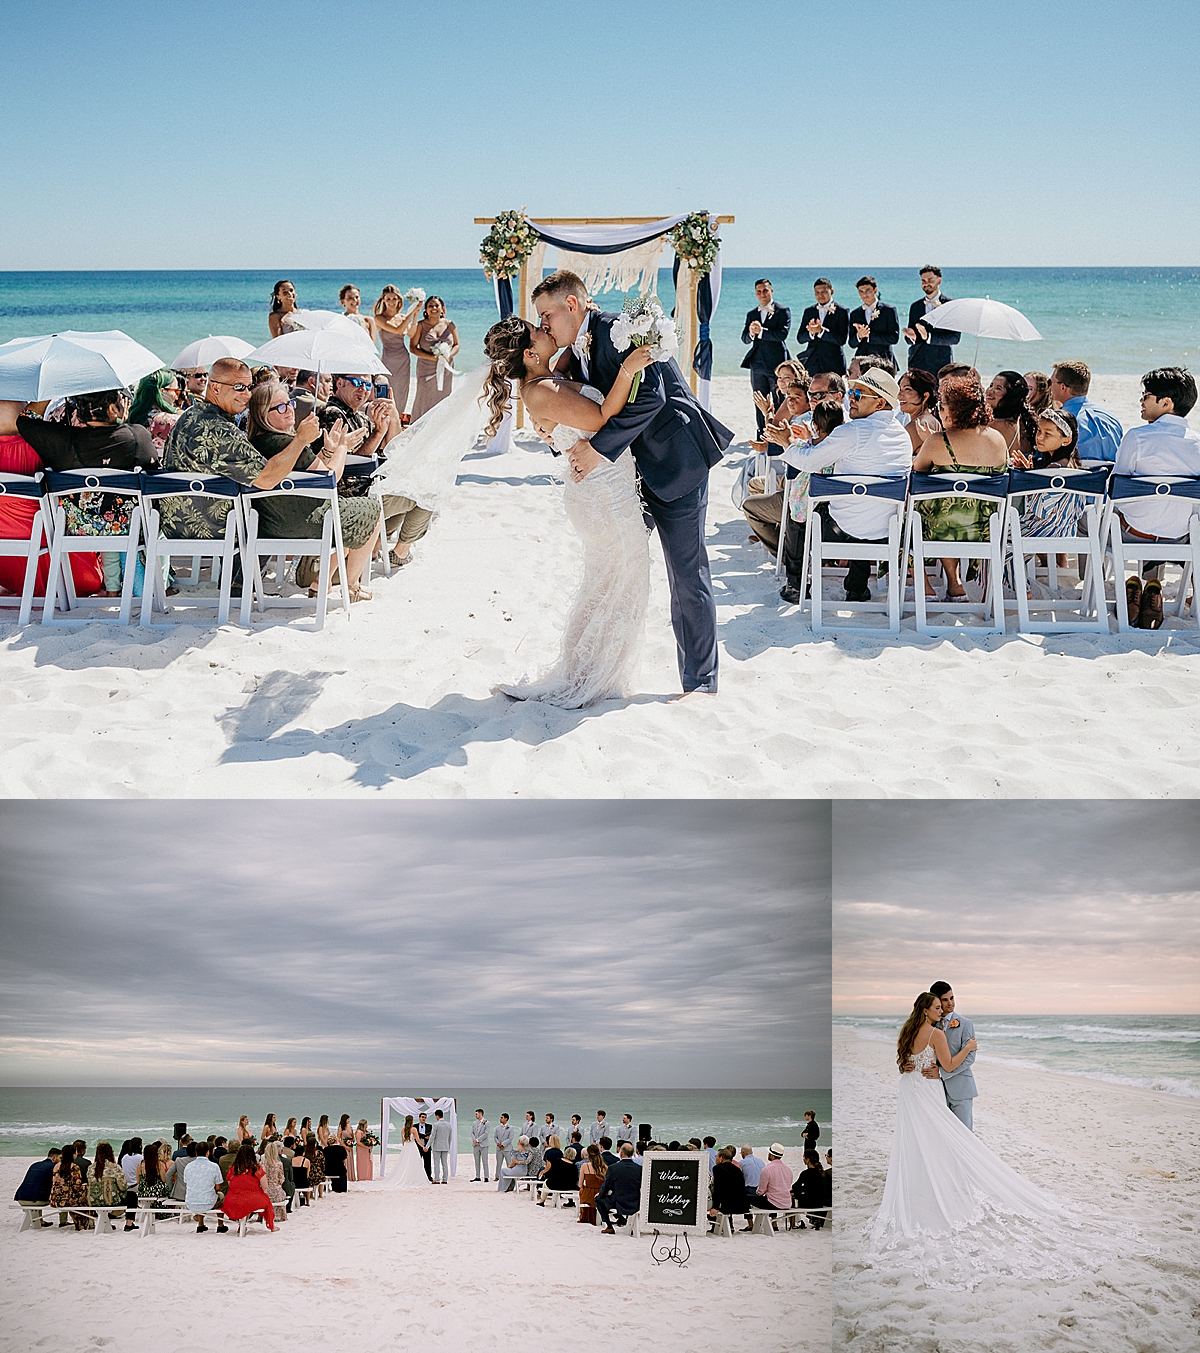 stormy beach wedding day with bride and groom for destination beach wedding 